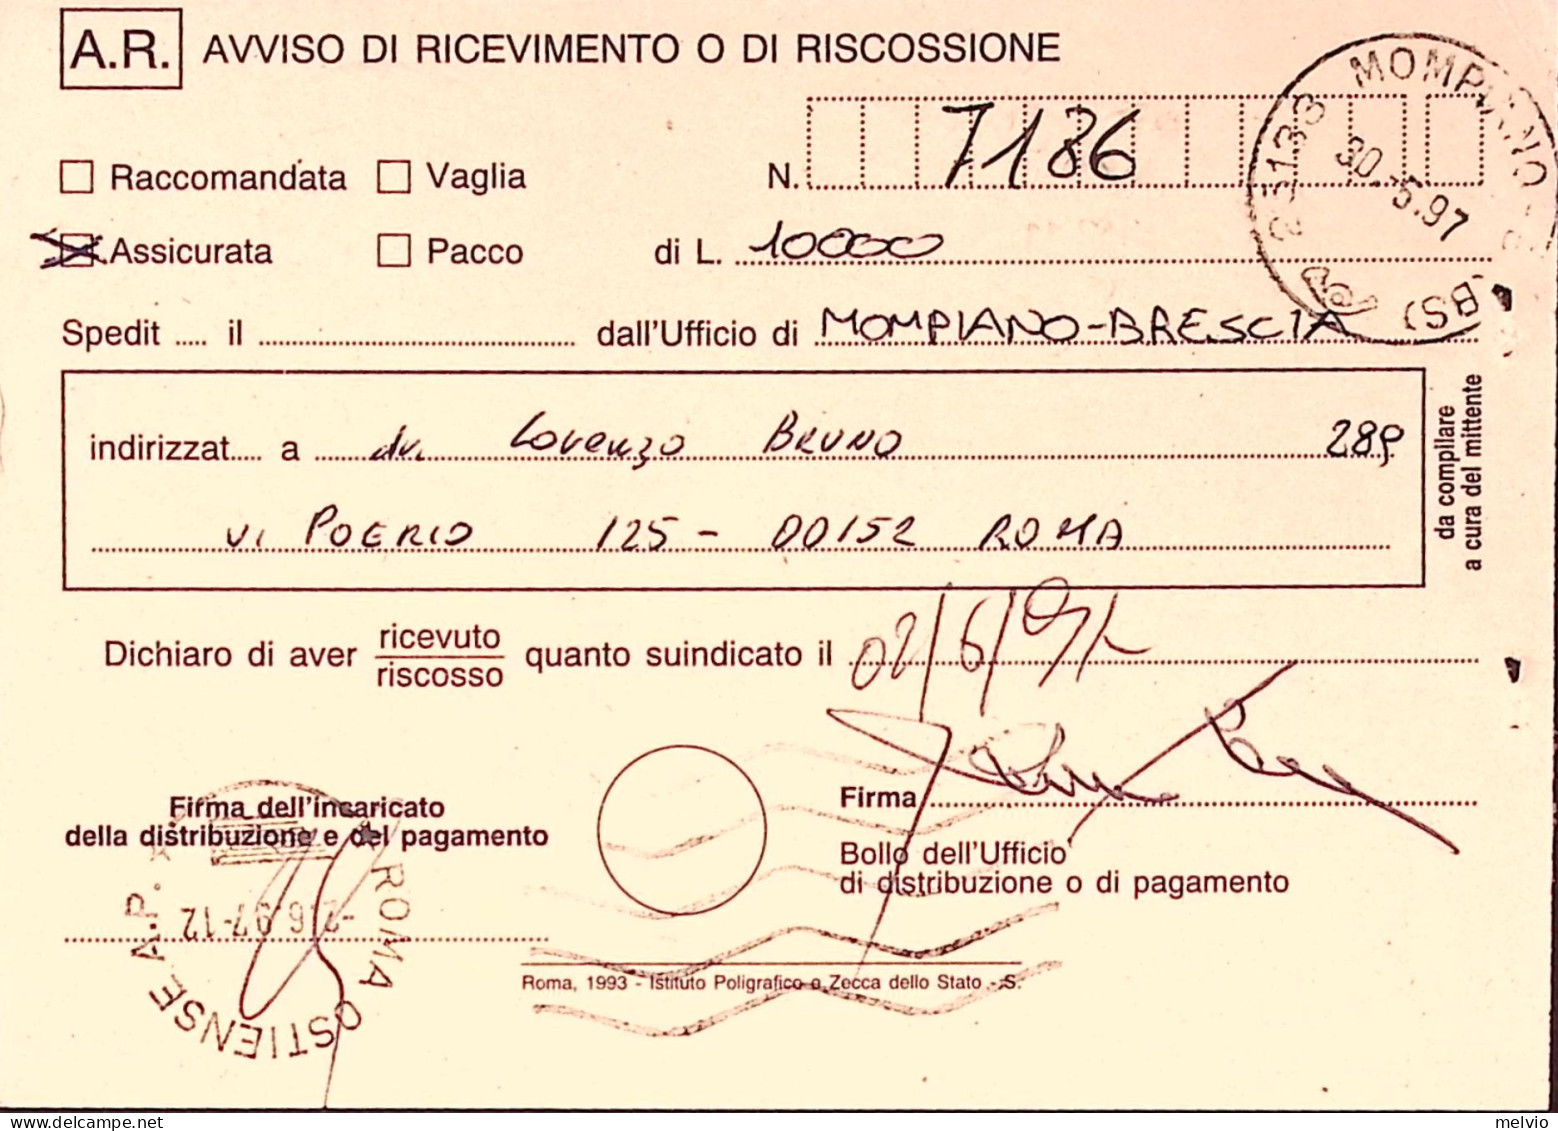 1997-FIERA ROMA Lire 800 Isolato Su Avviso Ricevimento - 1991-00: Marcophilie